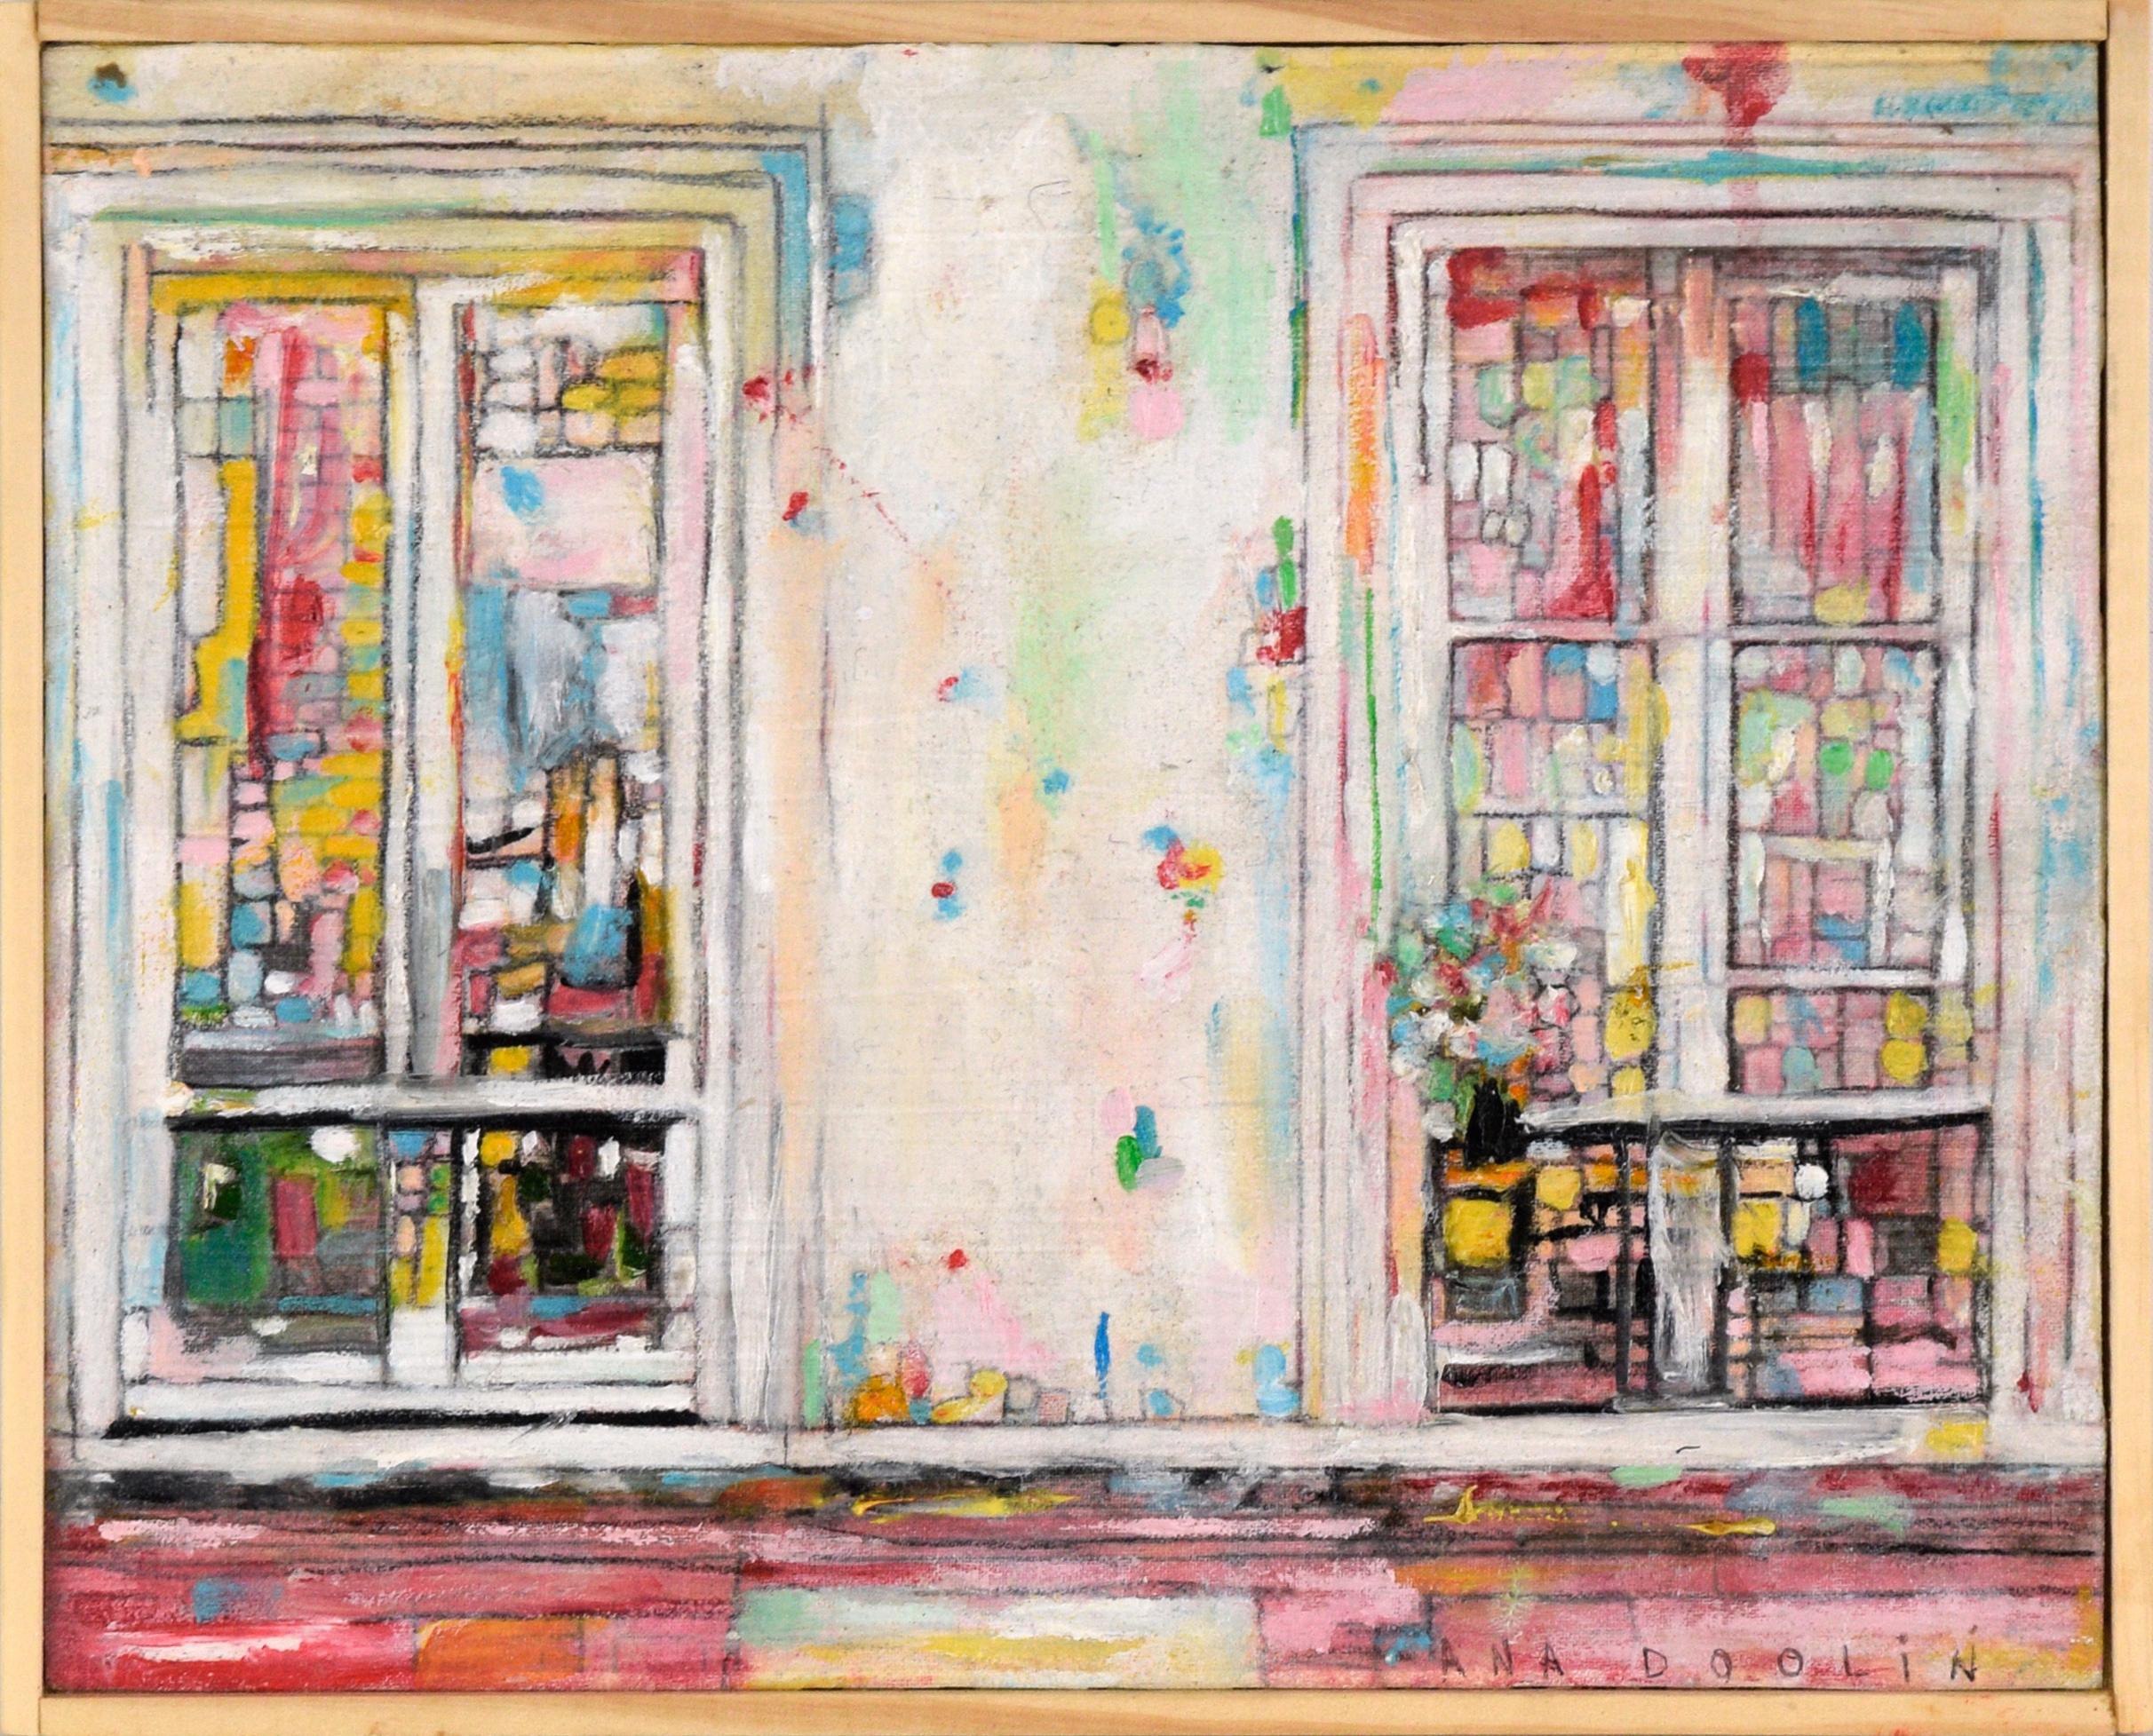 Ana Doolin Abstract Painting - Portuguese Windows #2